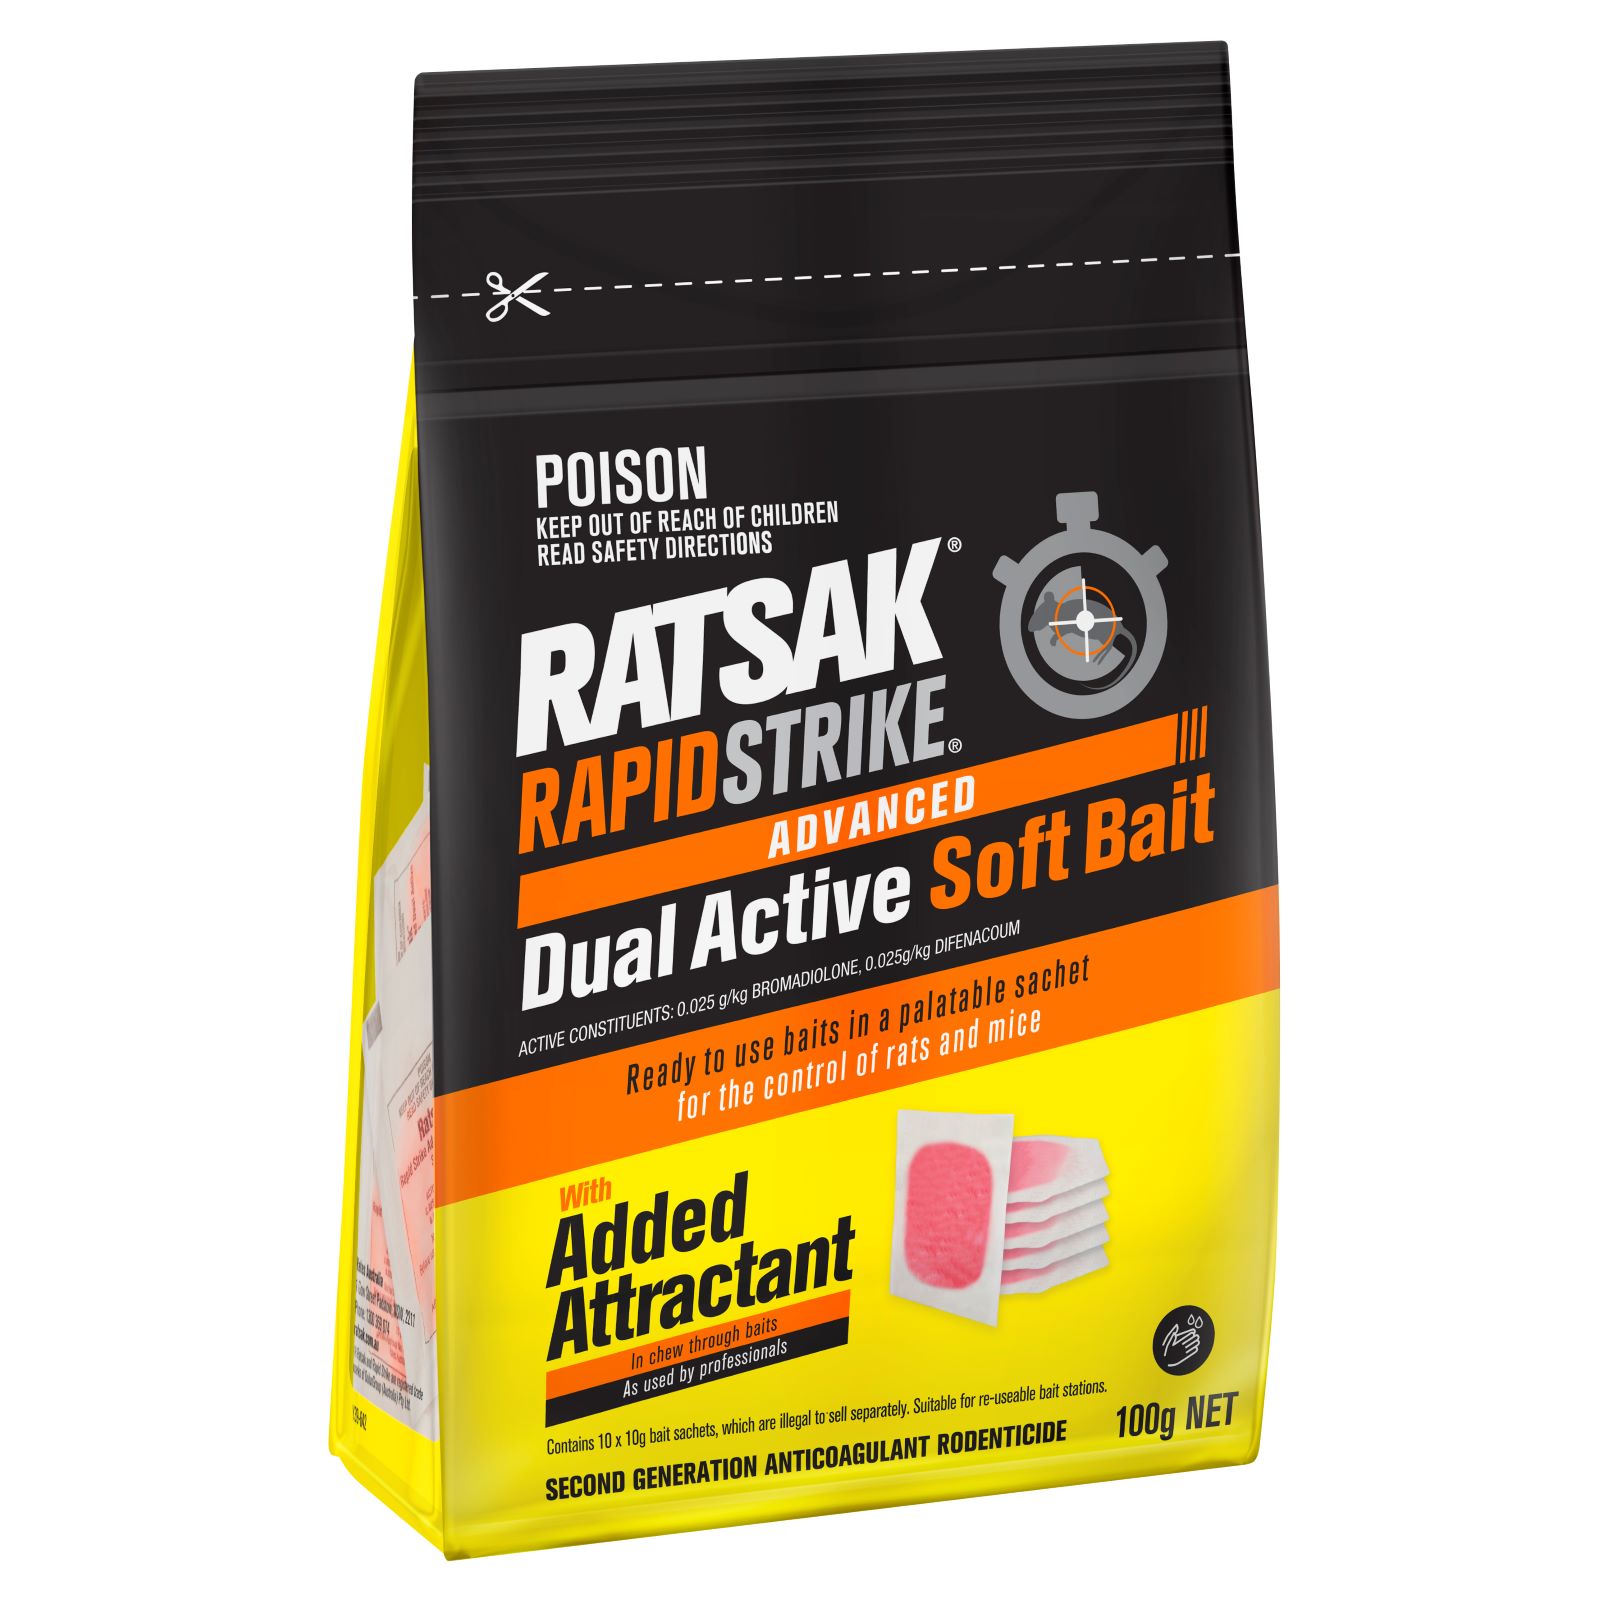 RATSAK Rapid Strike Advanced Dual Active Soft Bait